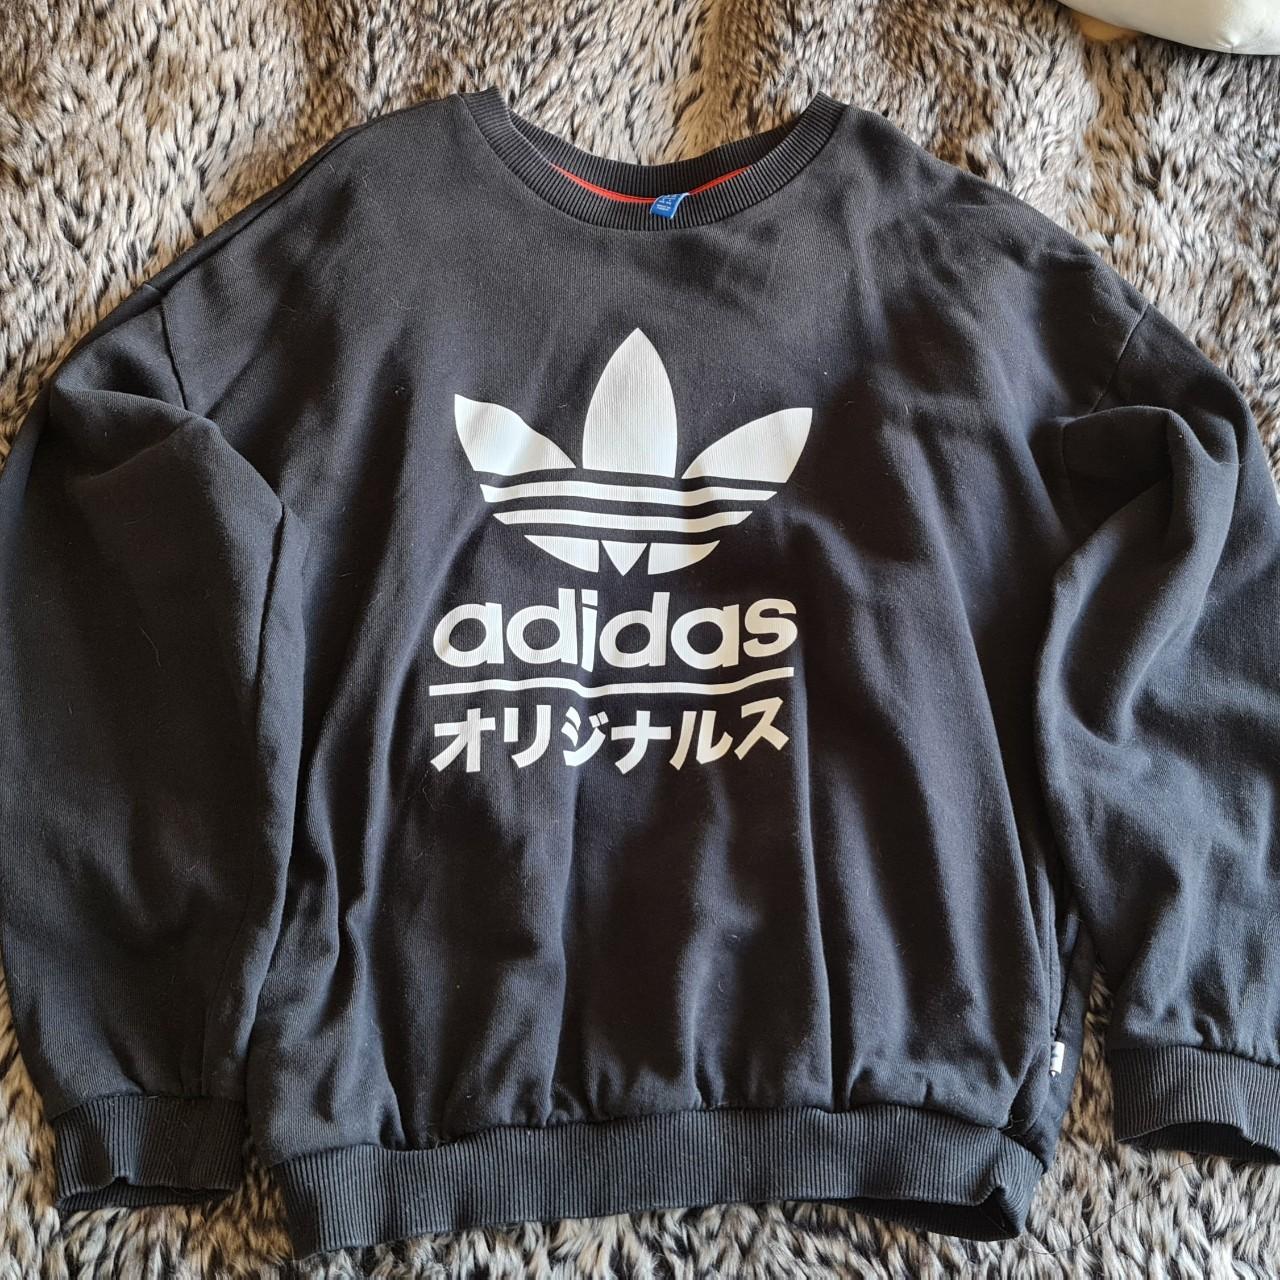 Adidas Originals Japanese Print Sweater Size... 